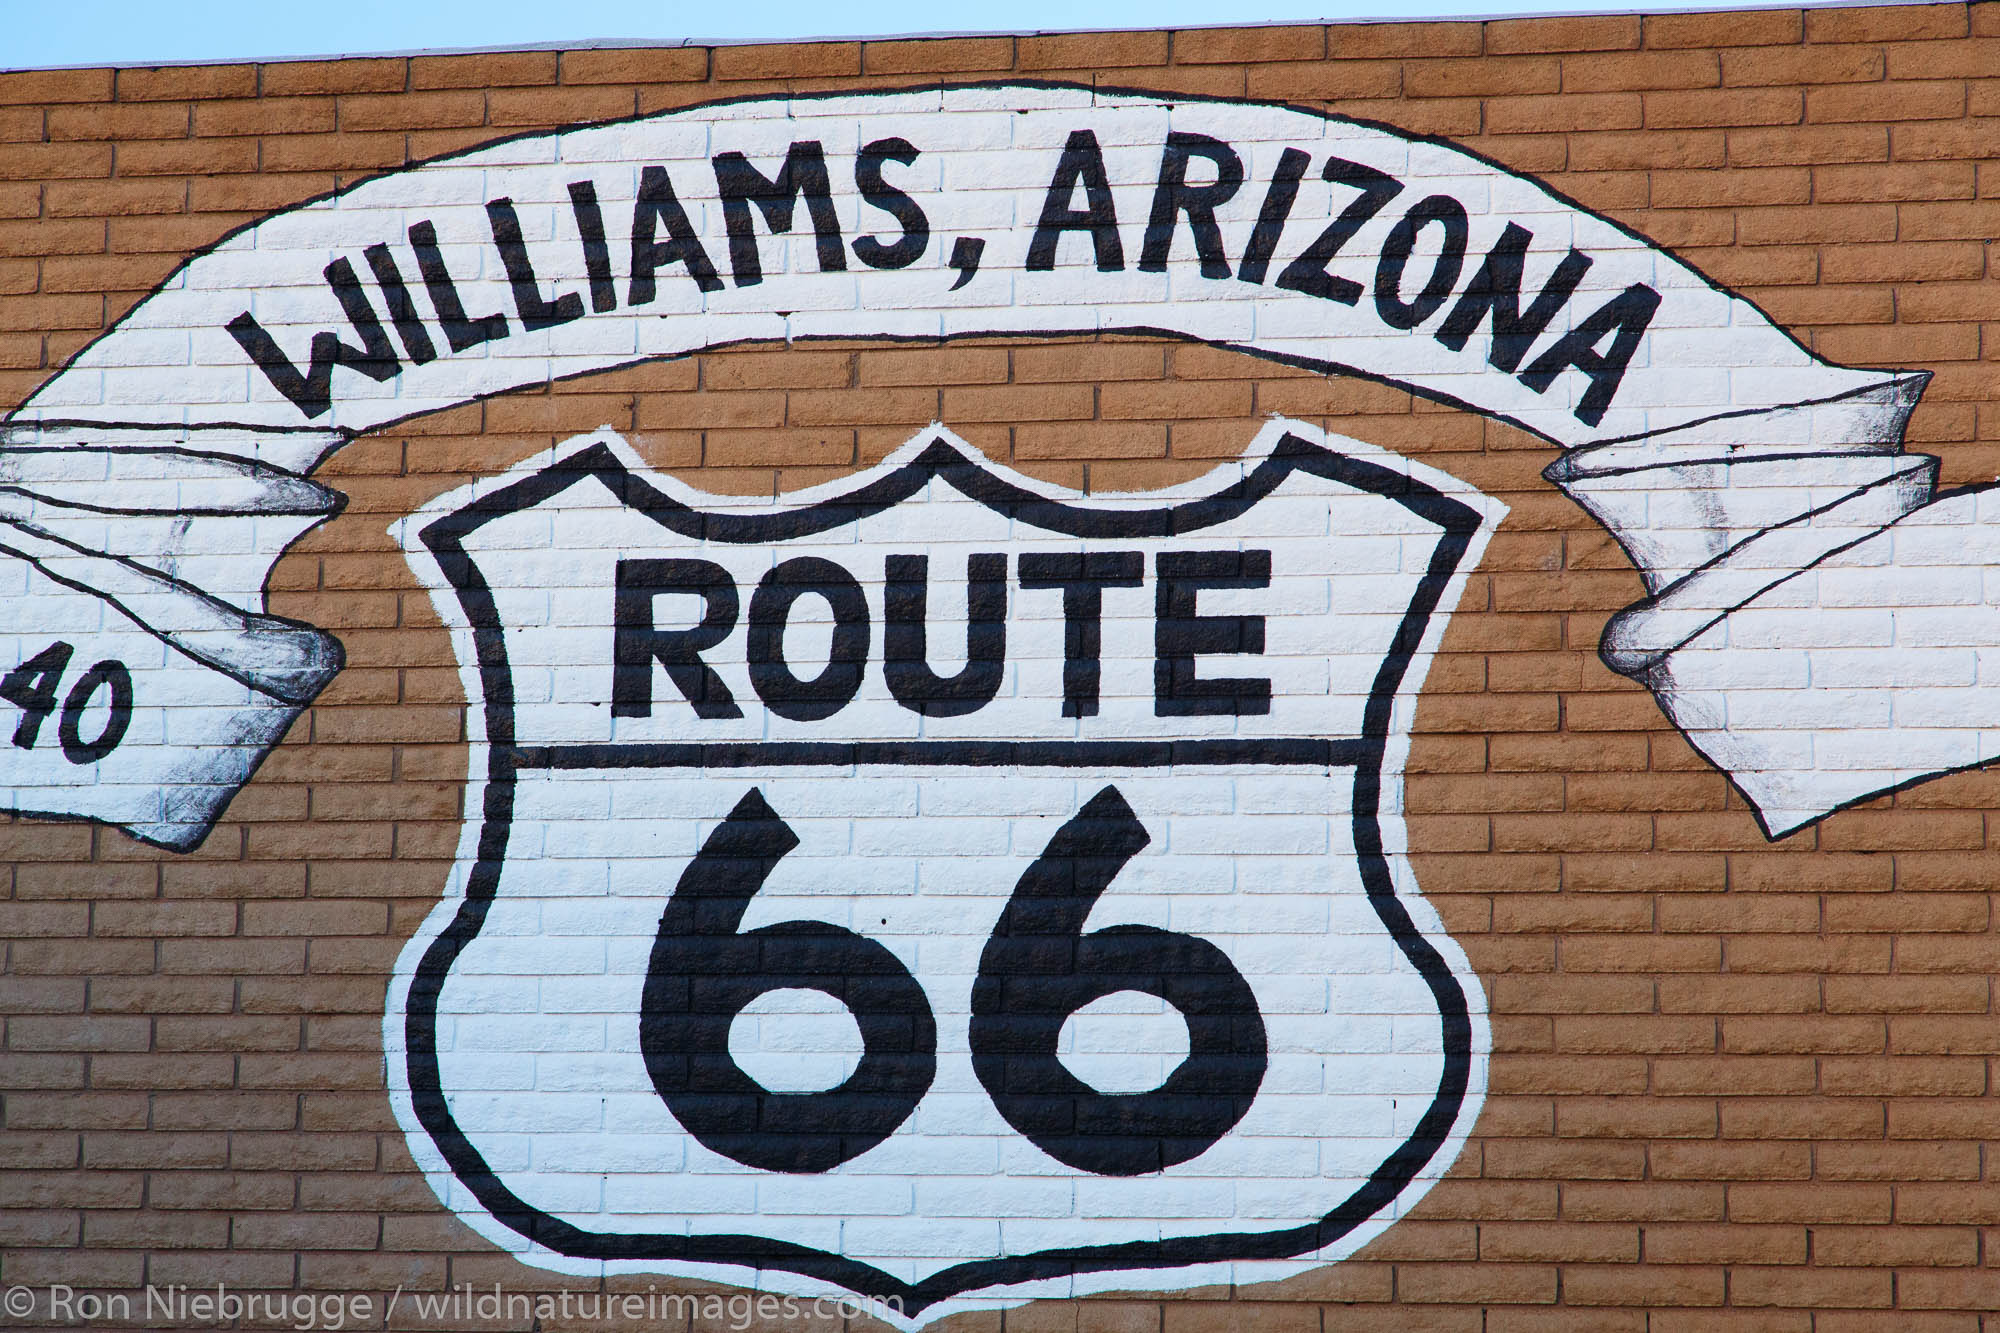 Along Route 66 in Williams, Arizona.